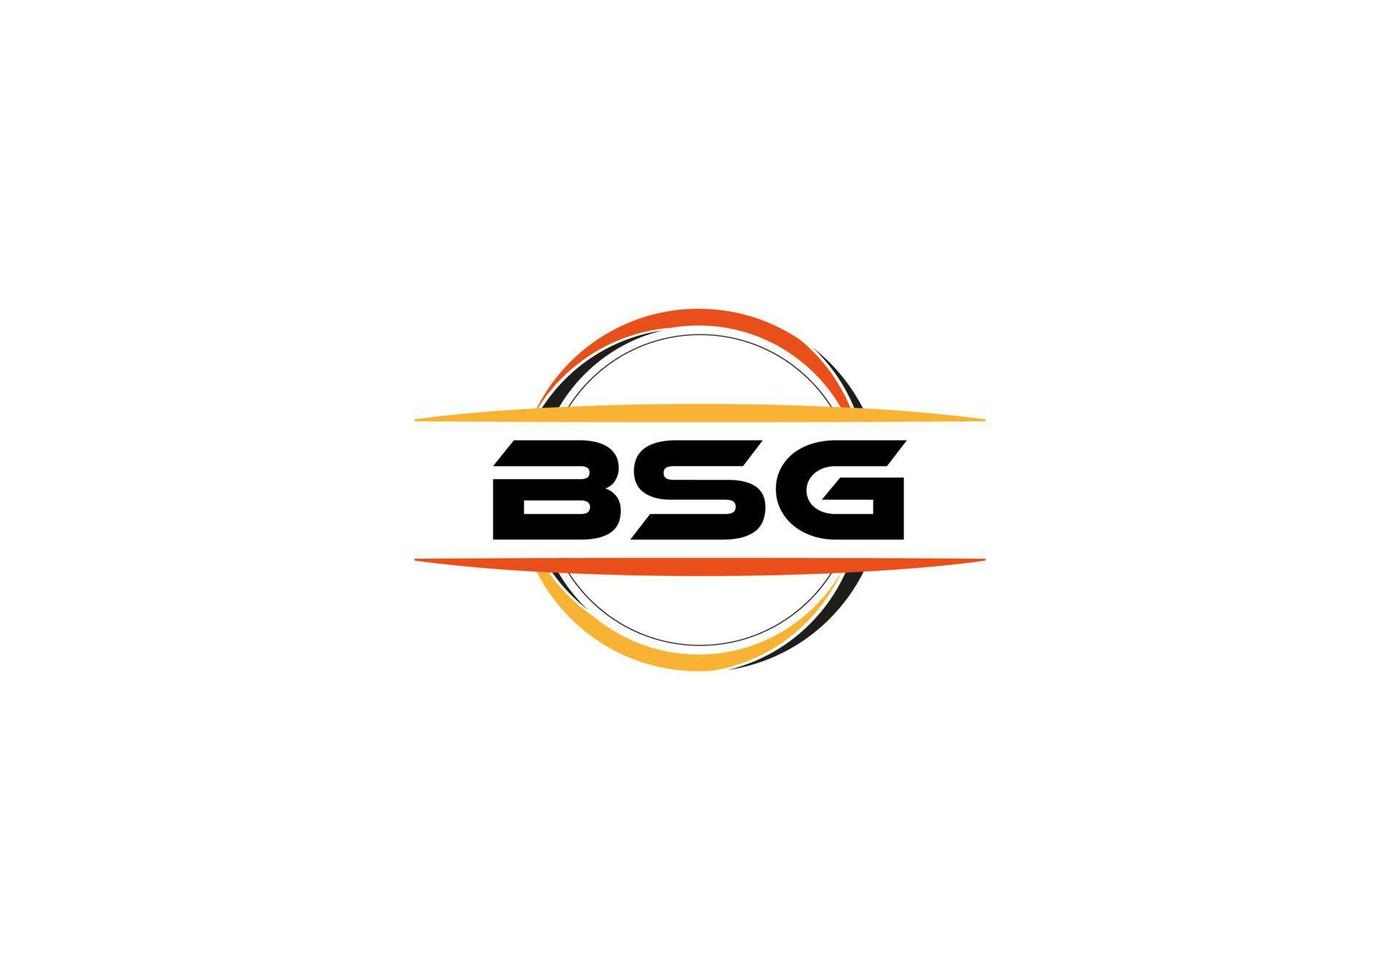 BSG letter royalty ellipse shape logo. BSG brush art logo. BSG logo for a company, business, and commercial use. vector